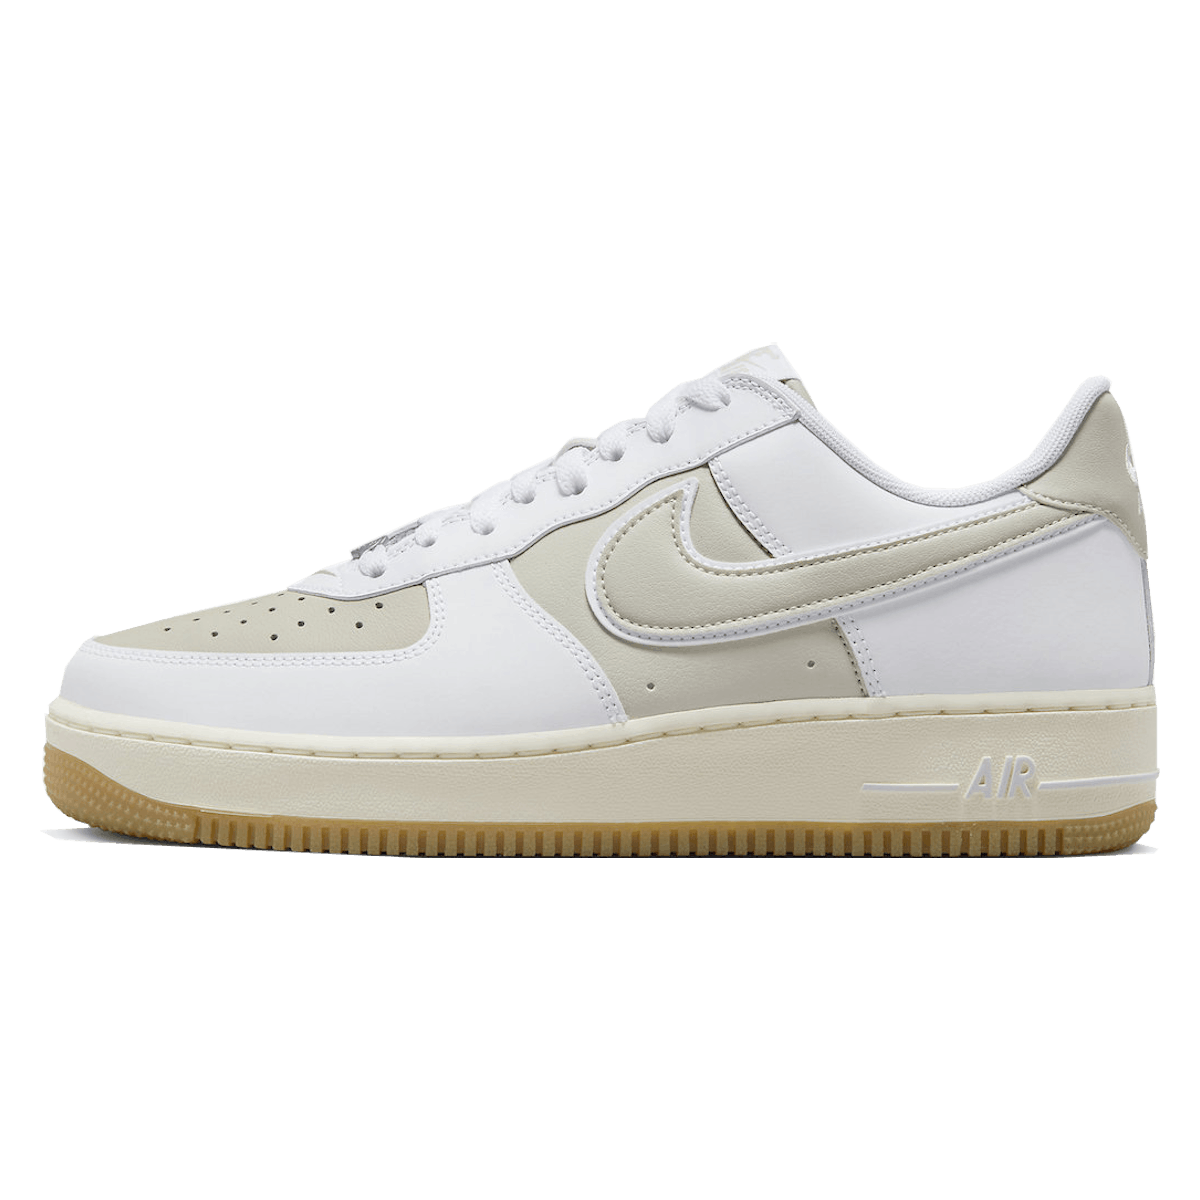 Nike Air Force 1 Low "White Gum"